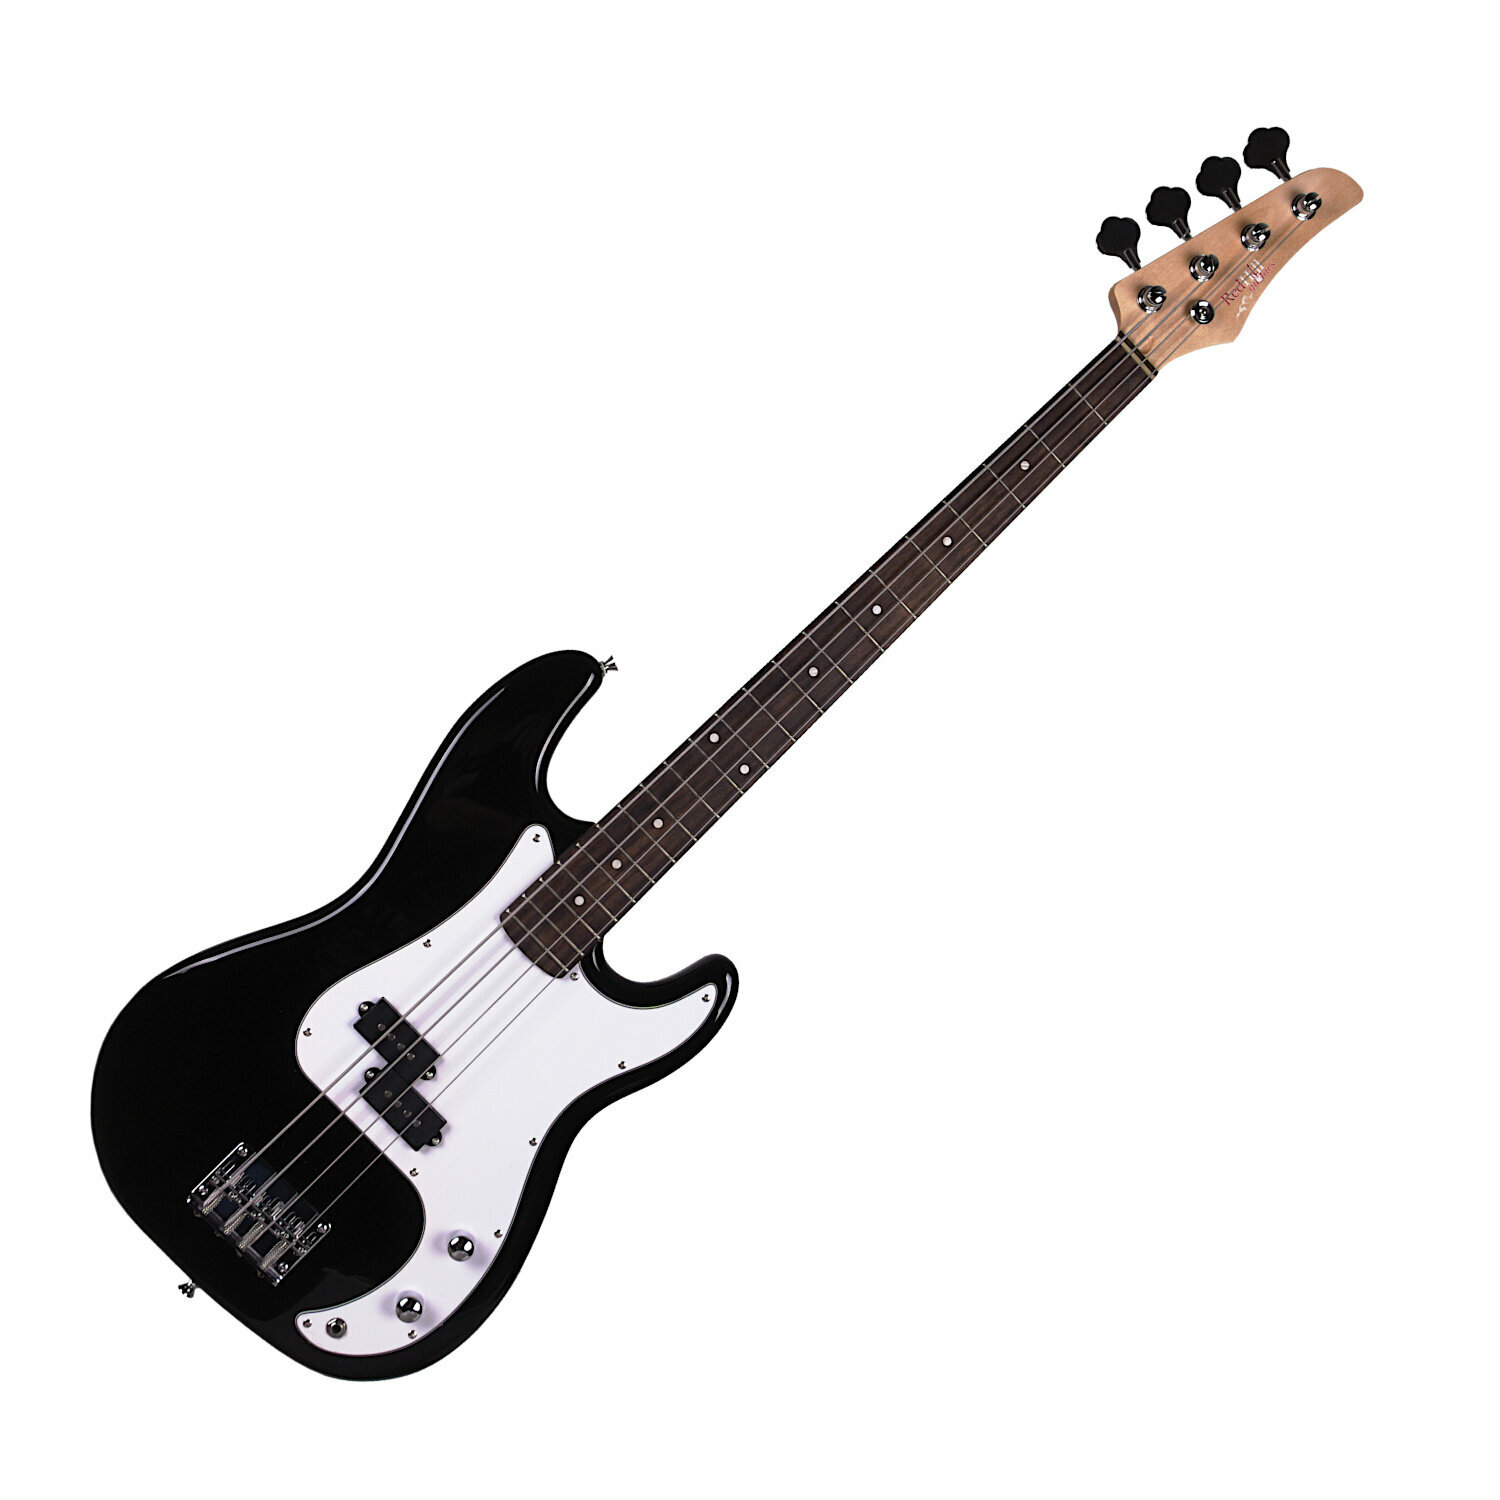 REDHILL PB200 BK - бас-гитара 4-стр P+P 864 мм корпус тополь гриф клен цвет черный